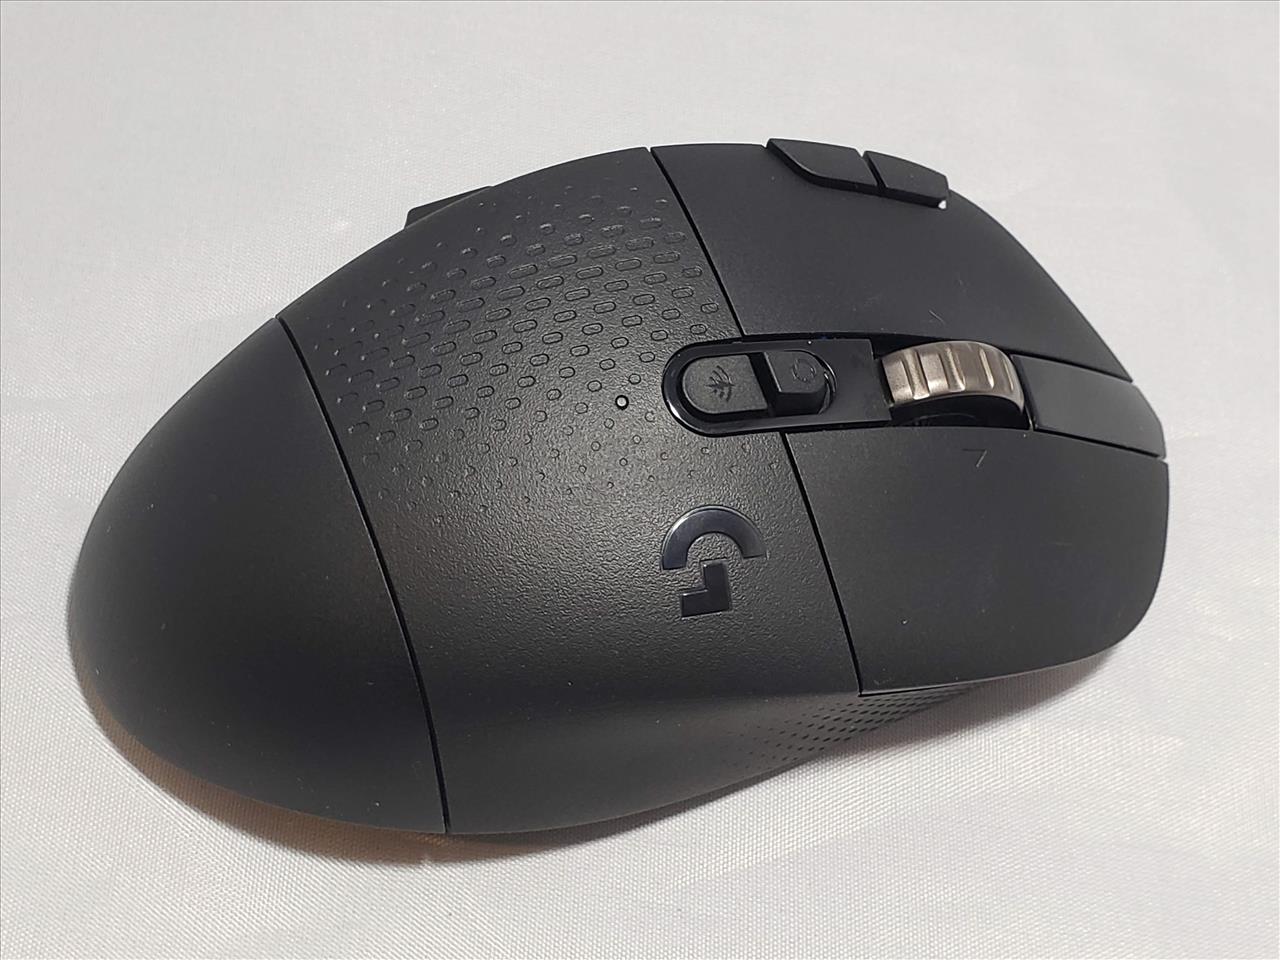 g604 lightspeed gaming mouse